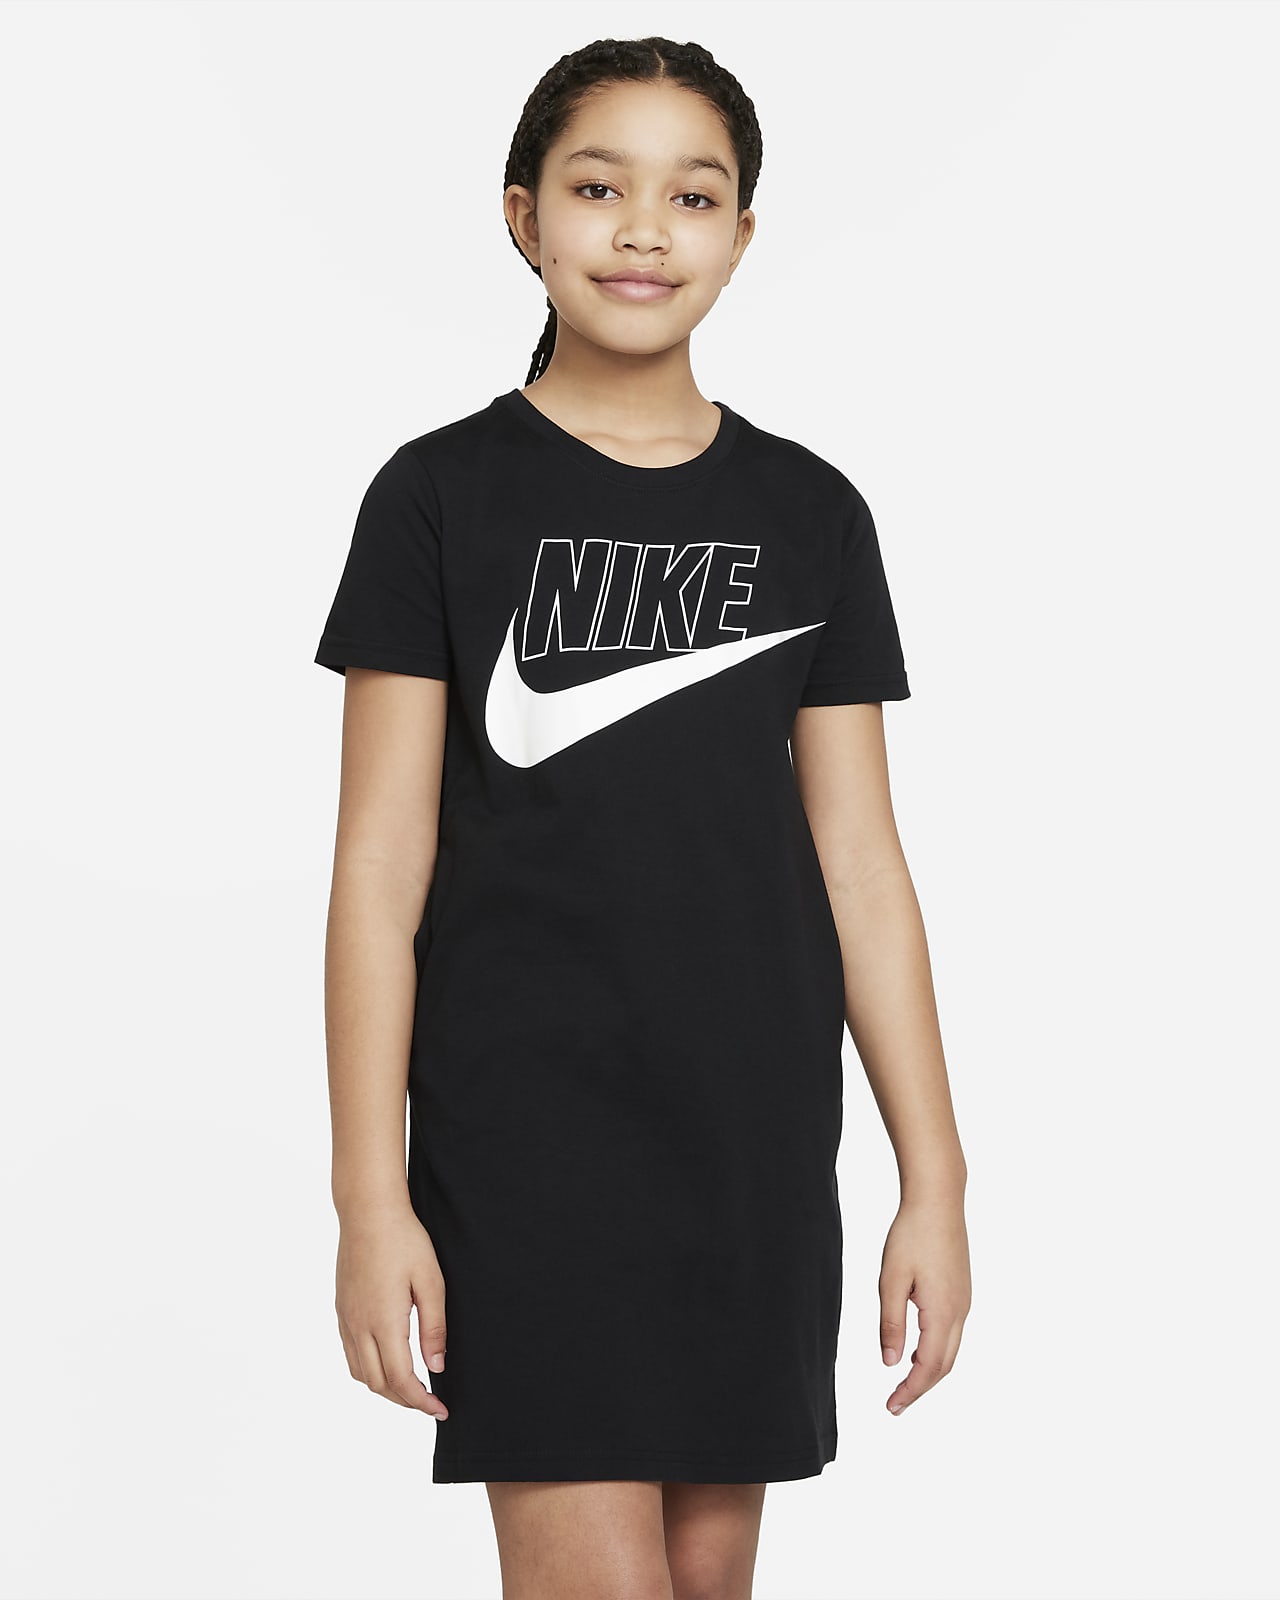 Nike Sportswear Kids' (Girls') T-Shirt Dress.